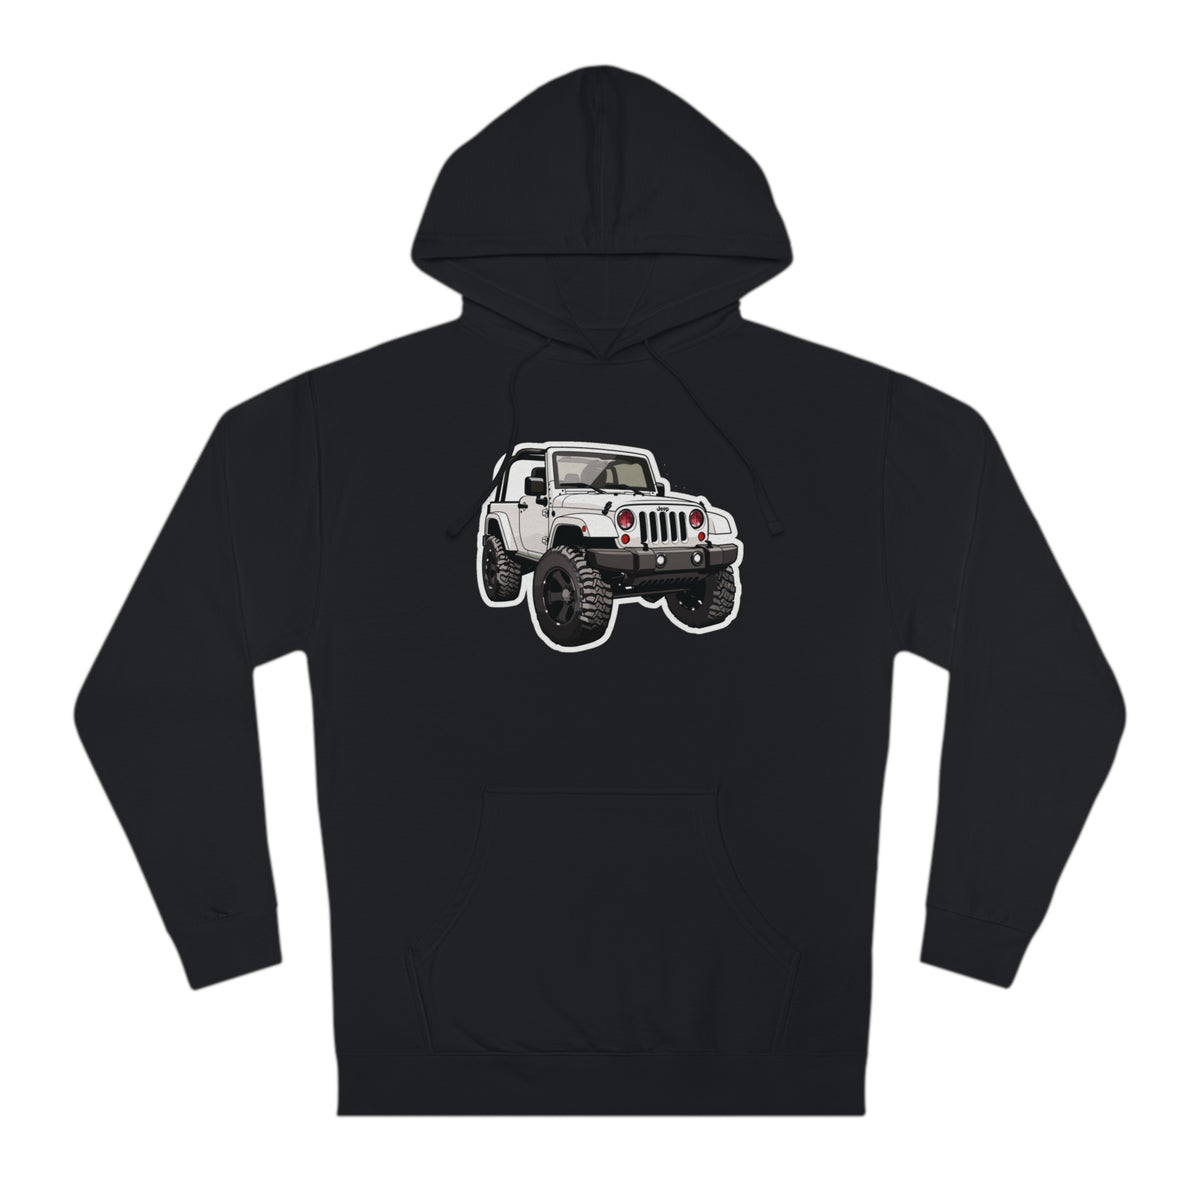 Rugged Explorer Men's Hoodie with Jeep Graphic Hooded Sweatshirt